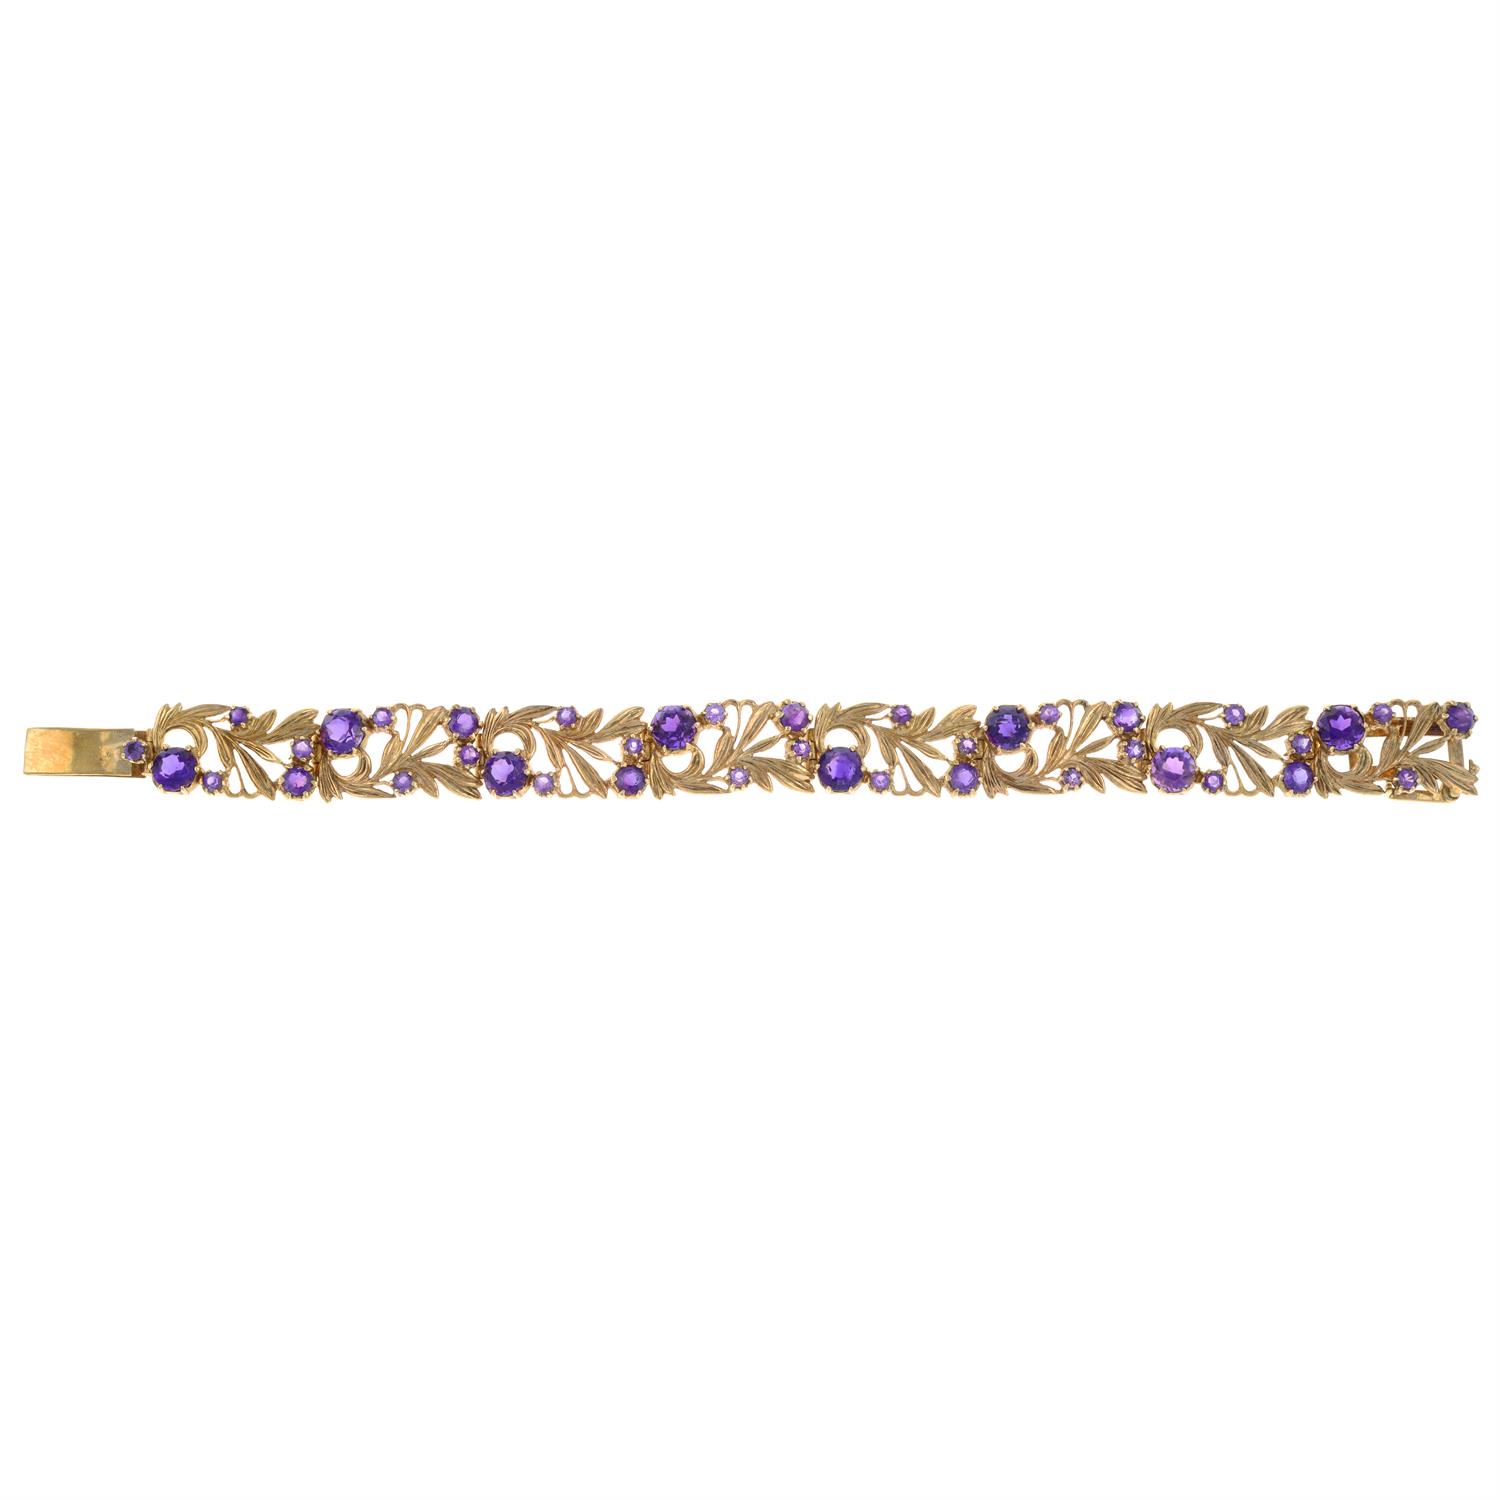 9ct gold amethyst bracelet by, Bernard Instone - Image 2 of 4